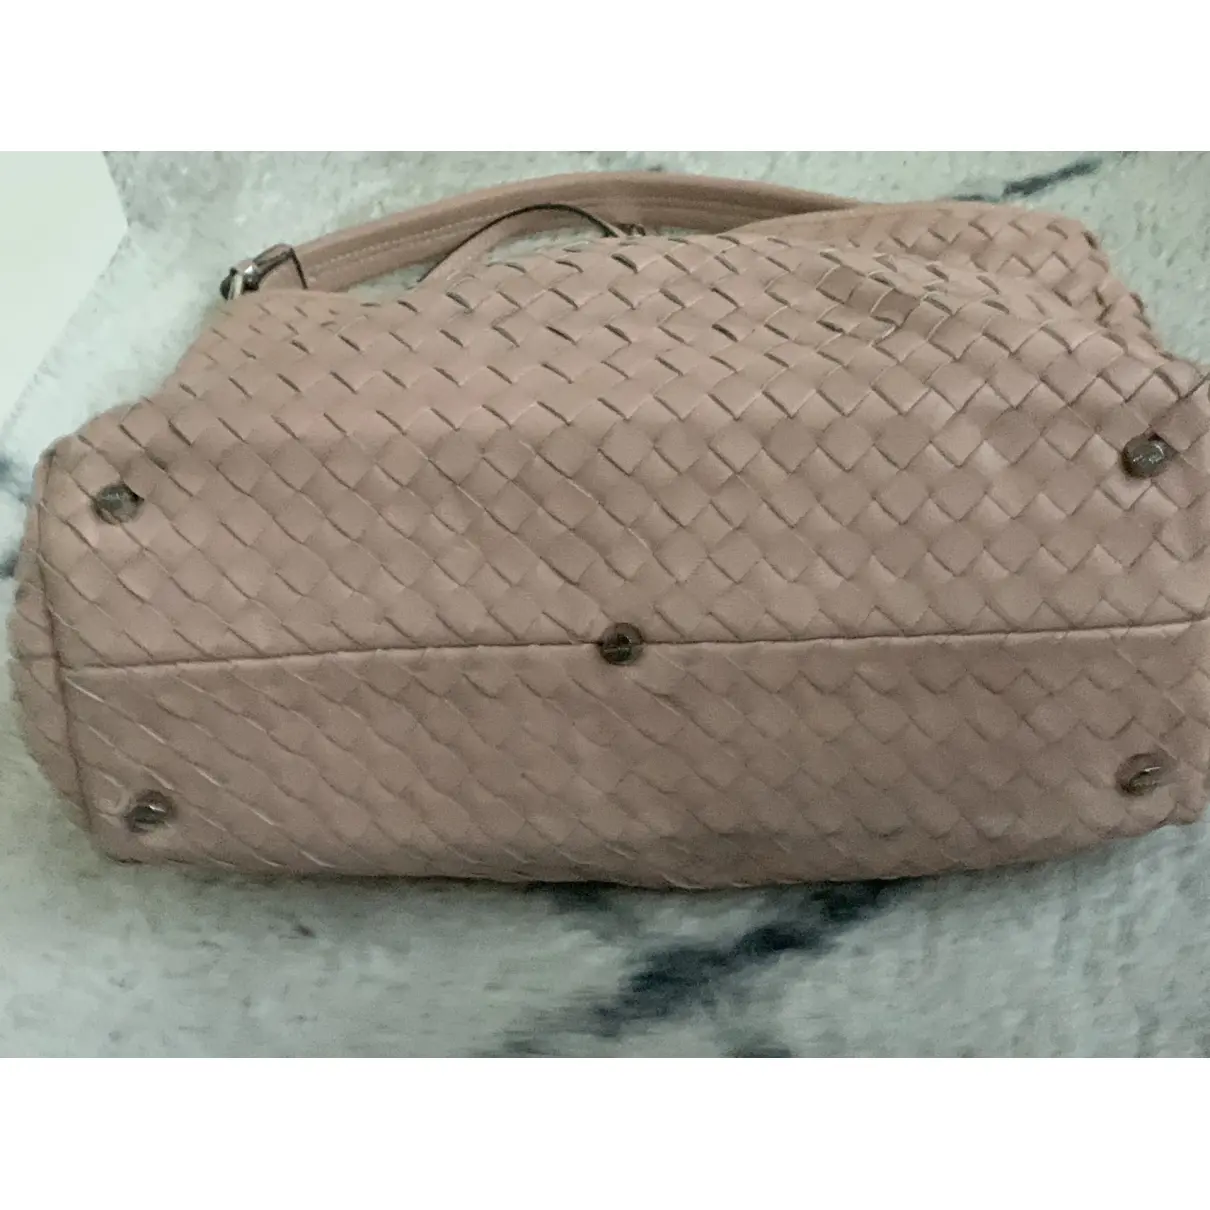 Buy Abro Leather handbag online